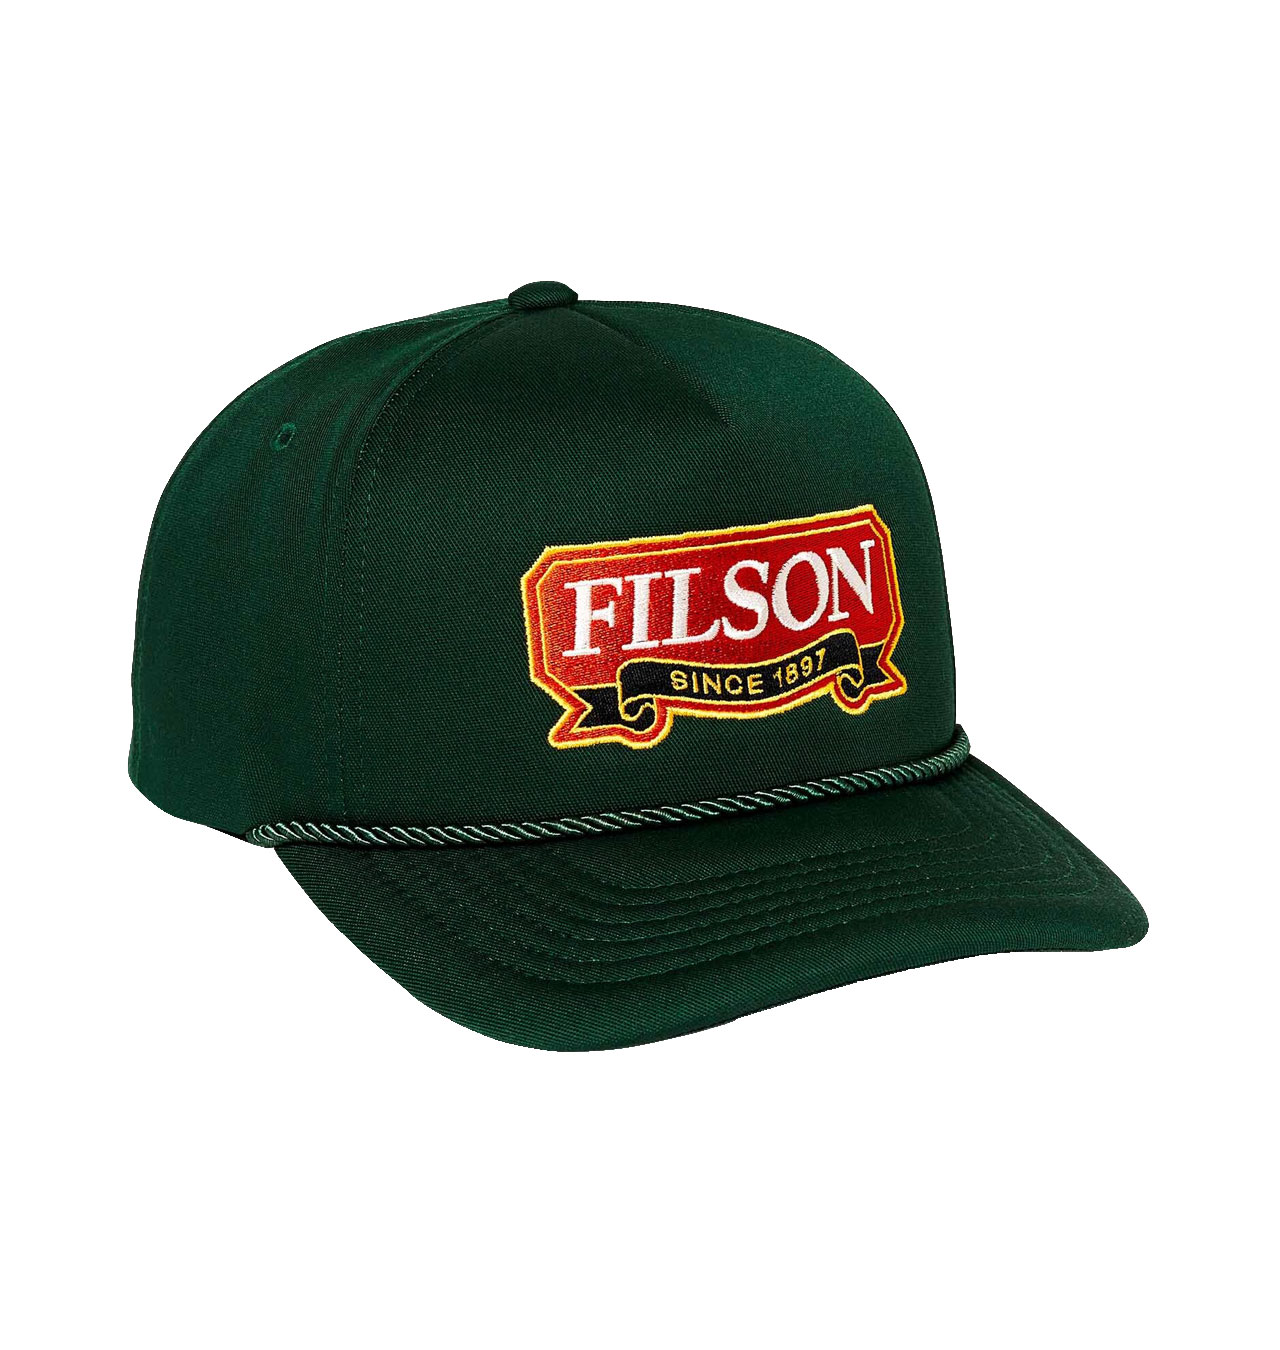 Filson - Harvester Cap - Spruce/Ribbon